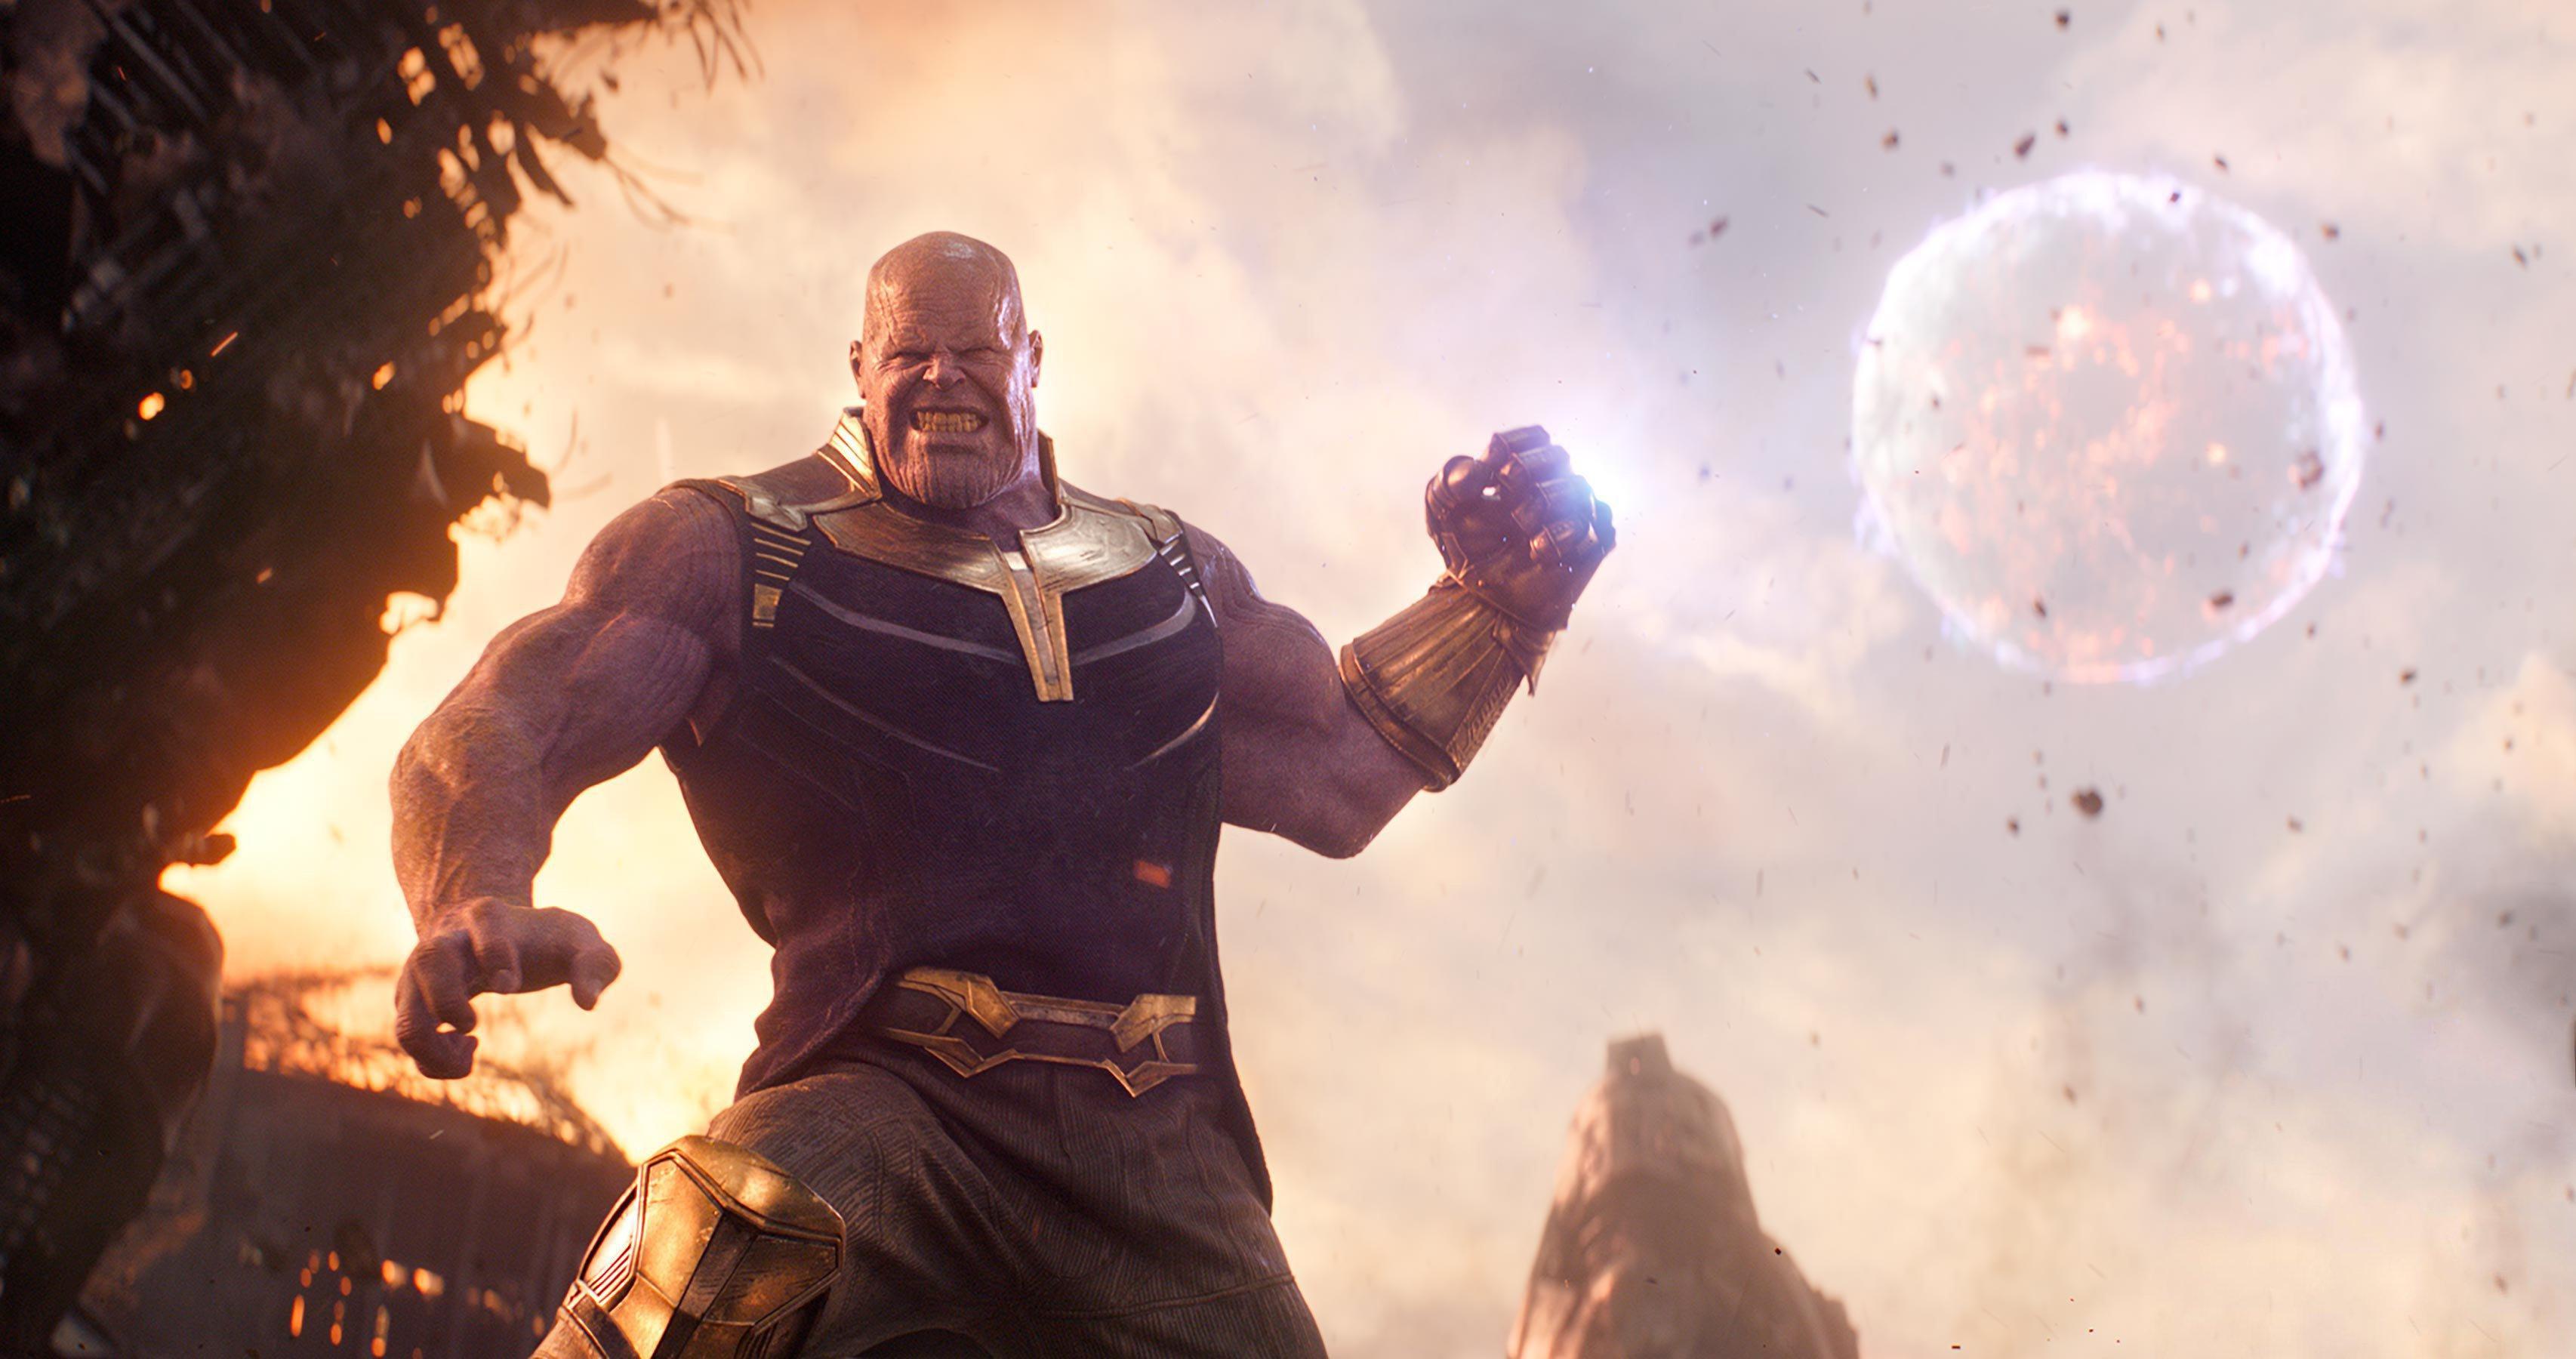 Avengers Infinity Thanos 4K Widescreen Desktop Wallpaper 922 3412x1800 px Picky